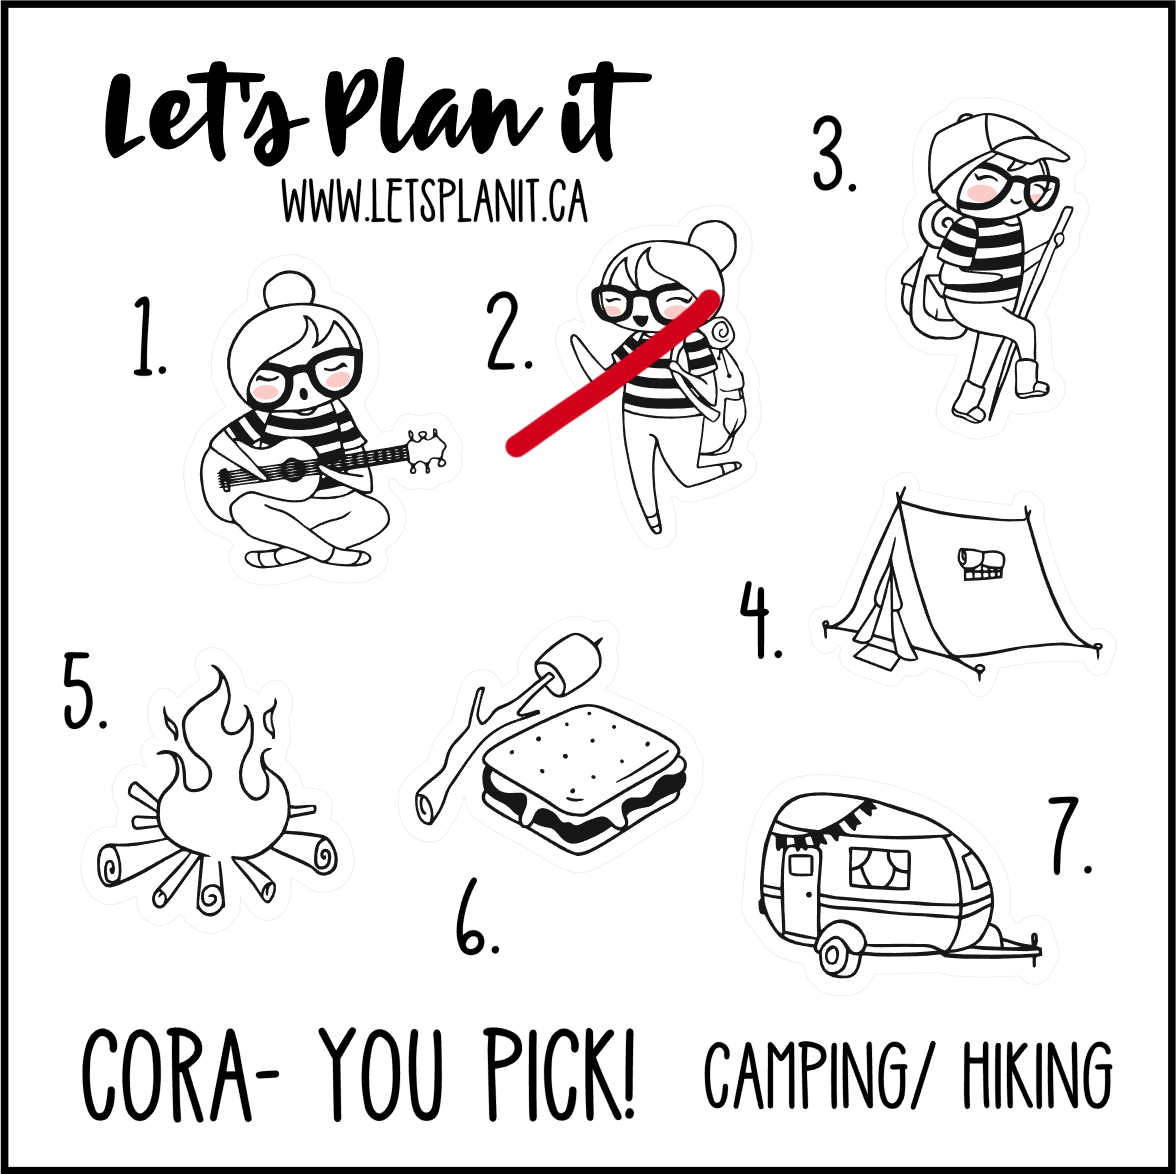 Cora-u-pick- Camping/ Hiking